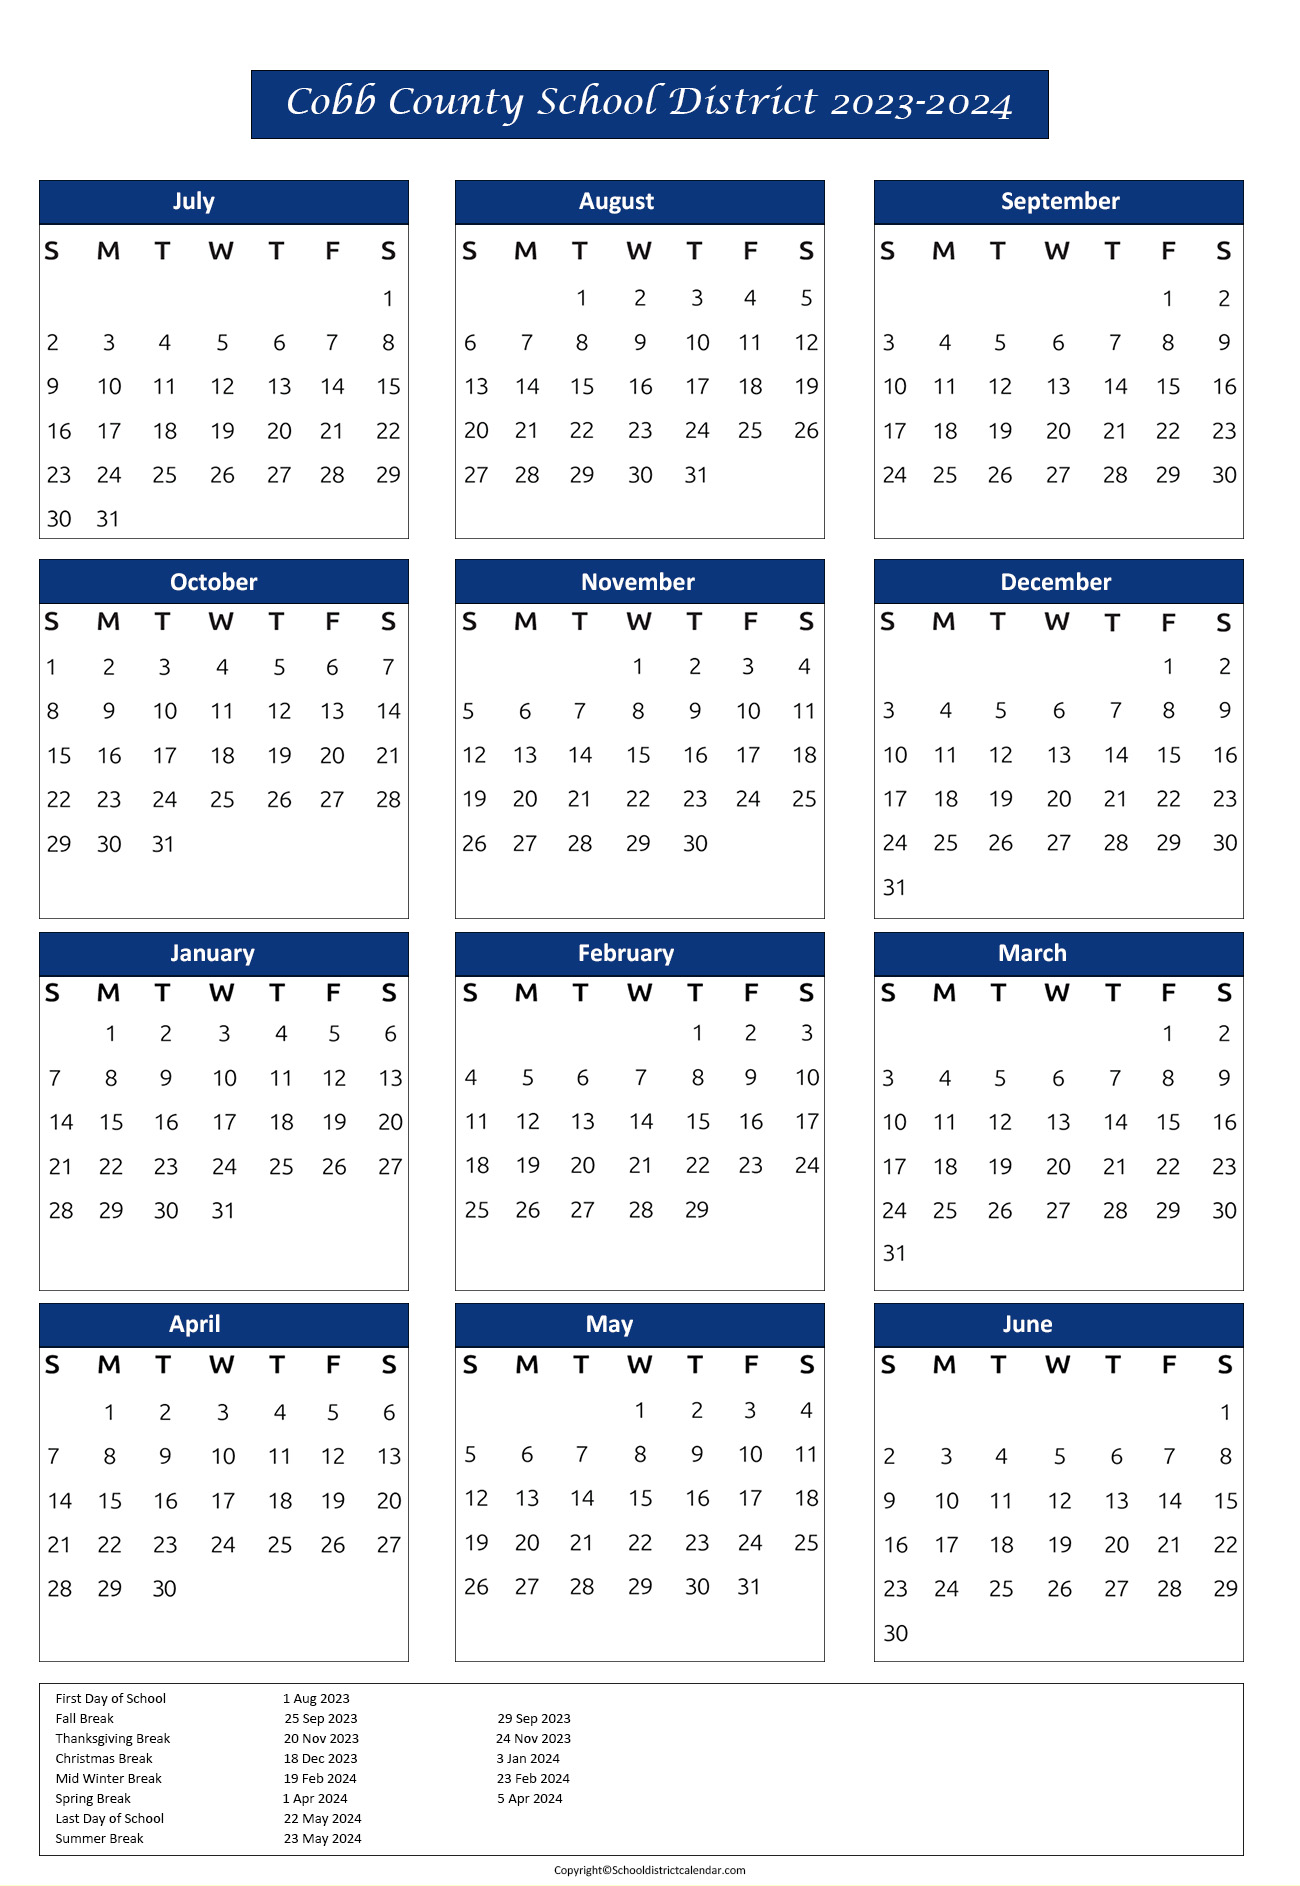 Cobb County School District Calendar Holidays 20232024